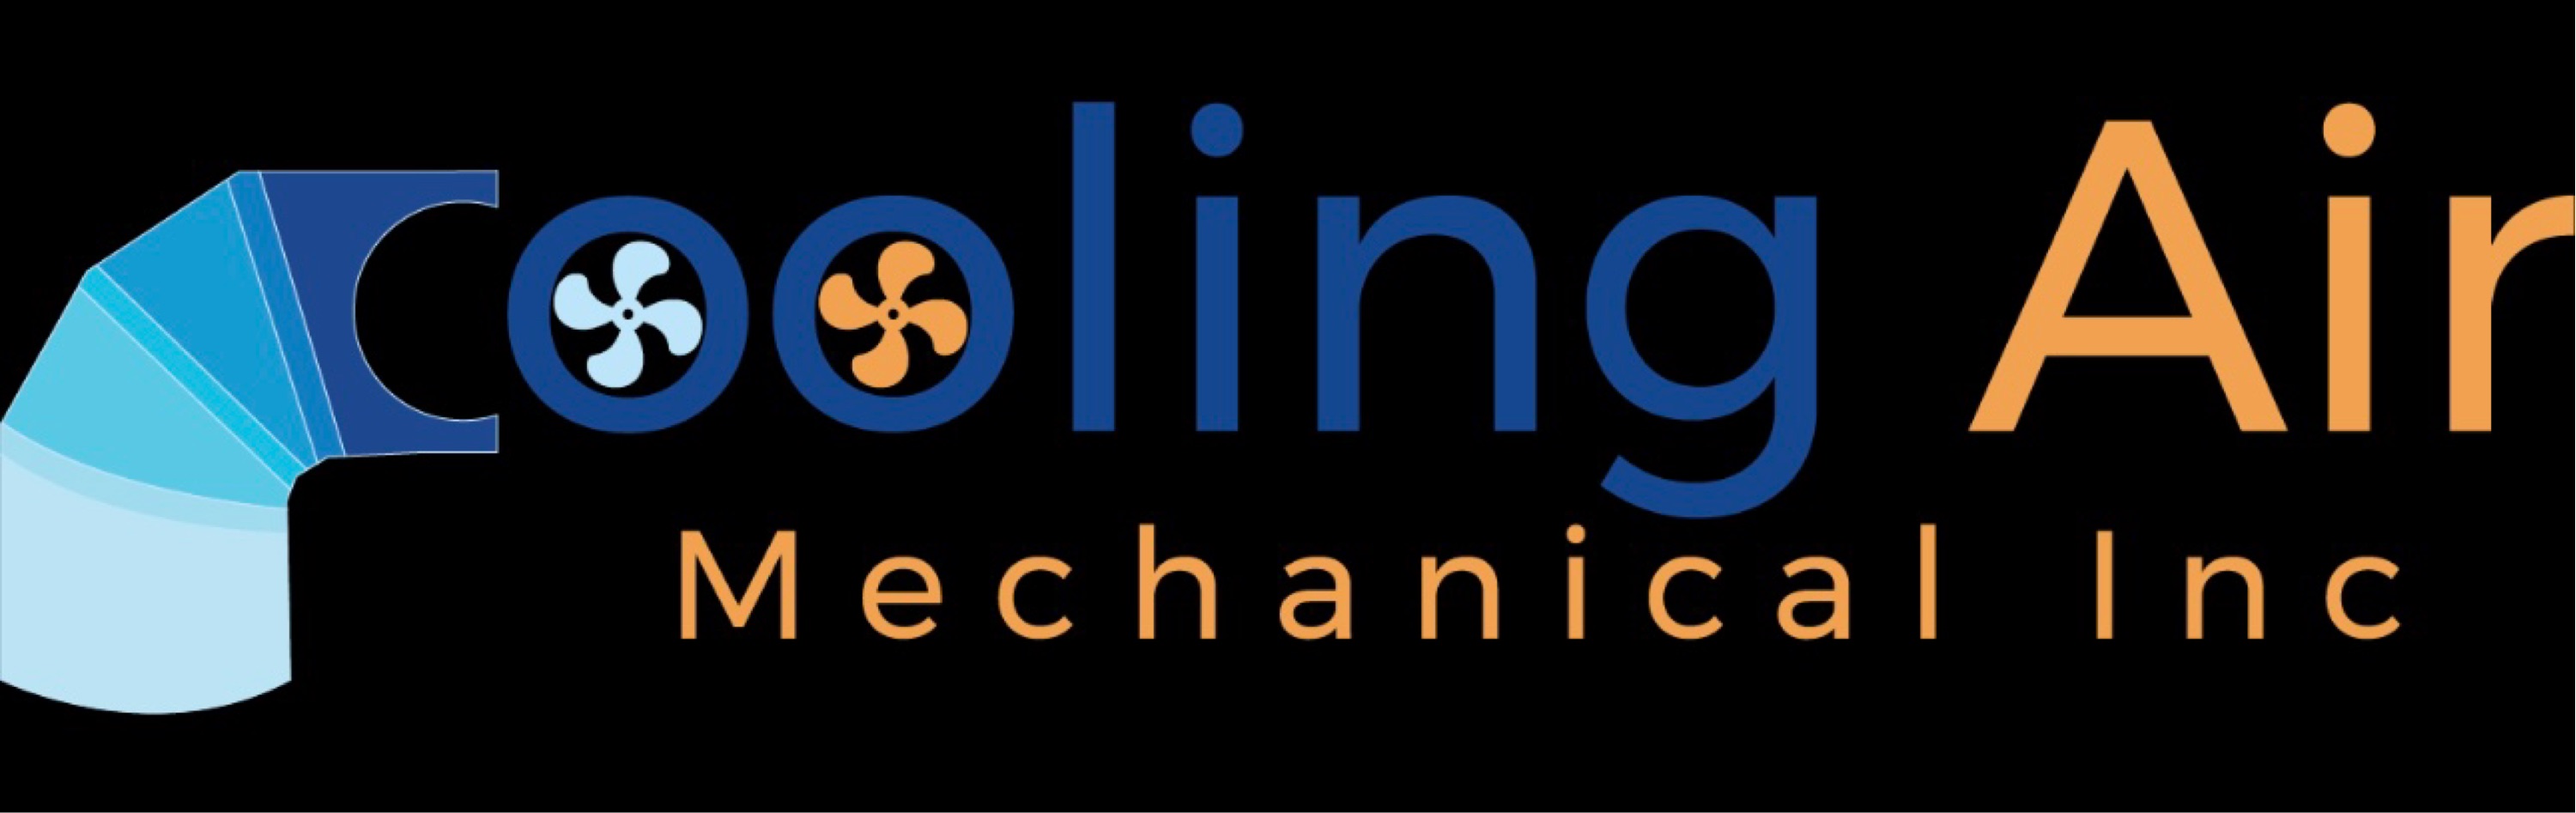 Cooling Air Mechanical INC Logo